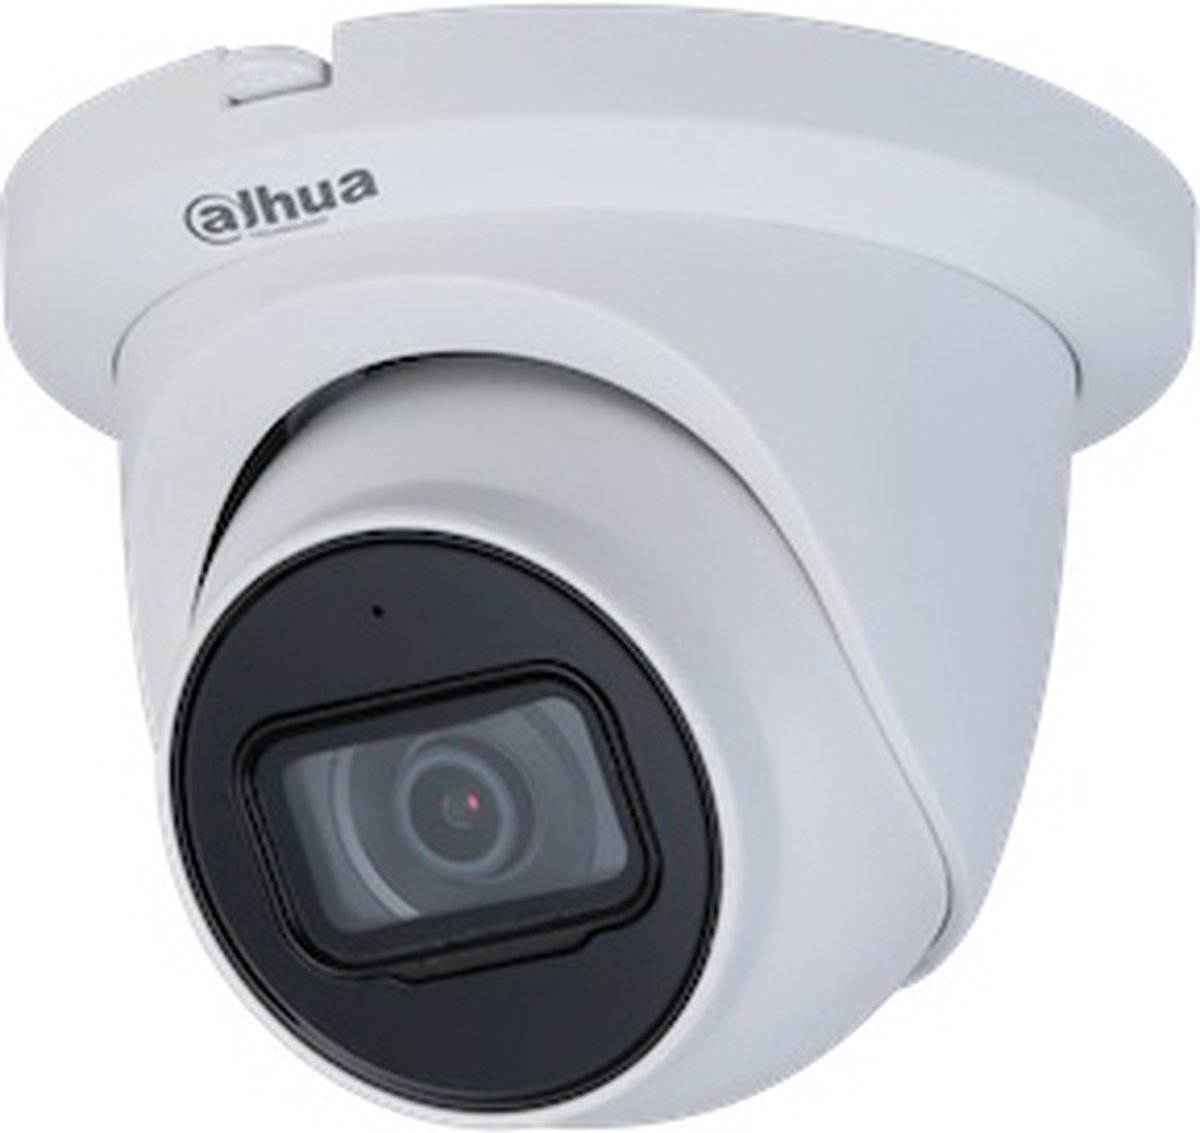 Dahua IPC-HDW3241TM-AS Full HD 2MP Starlight Lite AI buiten eyeball camera met 50m IR, microfoon, PoE, microSD - Beveiligingscamera IP camera bewakingscamera camerabewaking veiligheidscamera beveiliging netwerk camera webcam